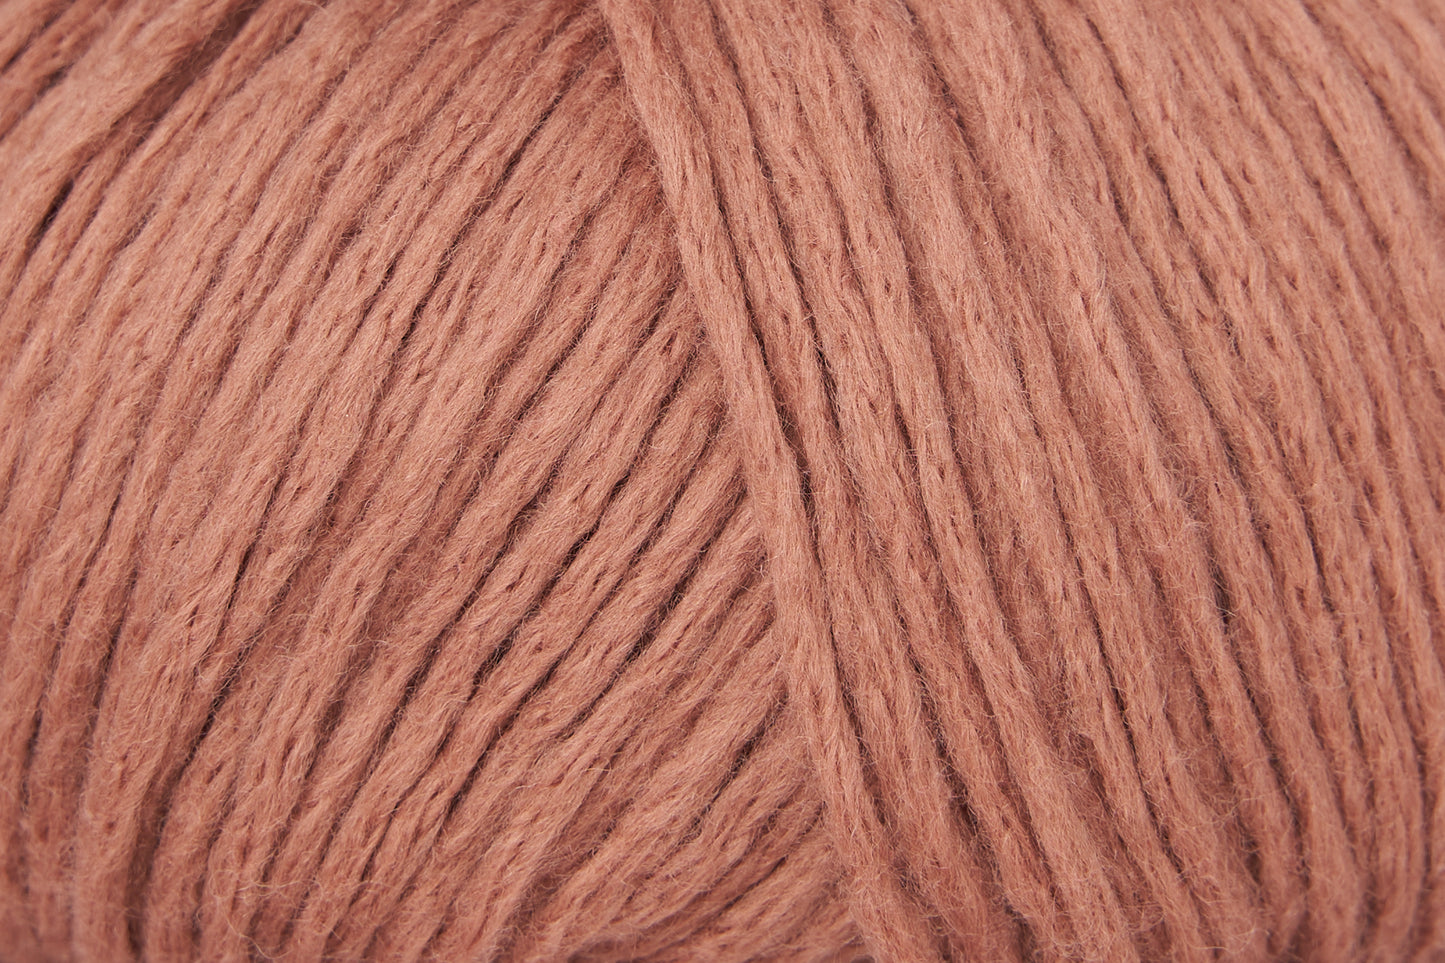 Rowan Cotton Wool